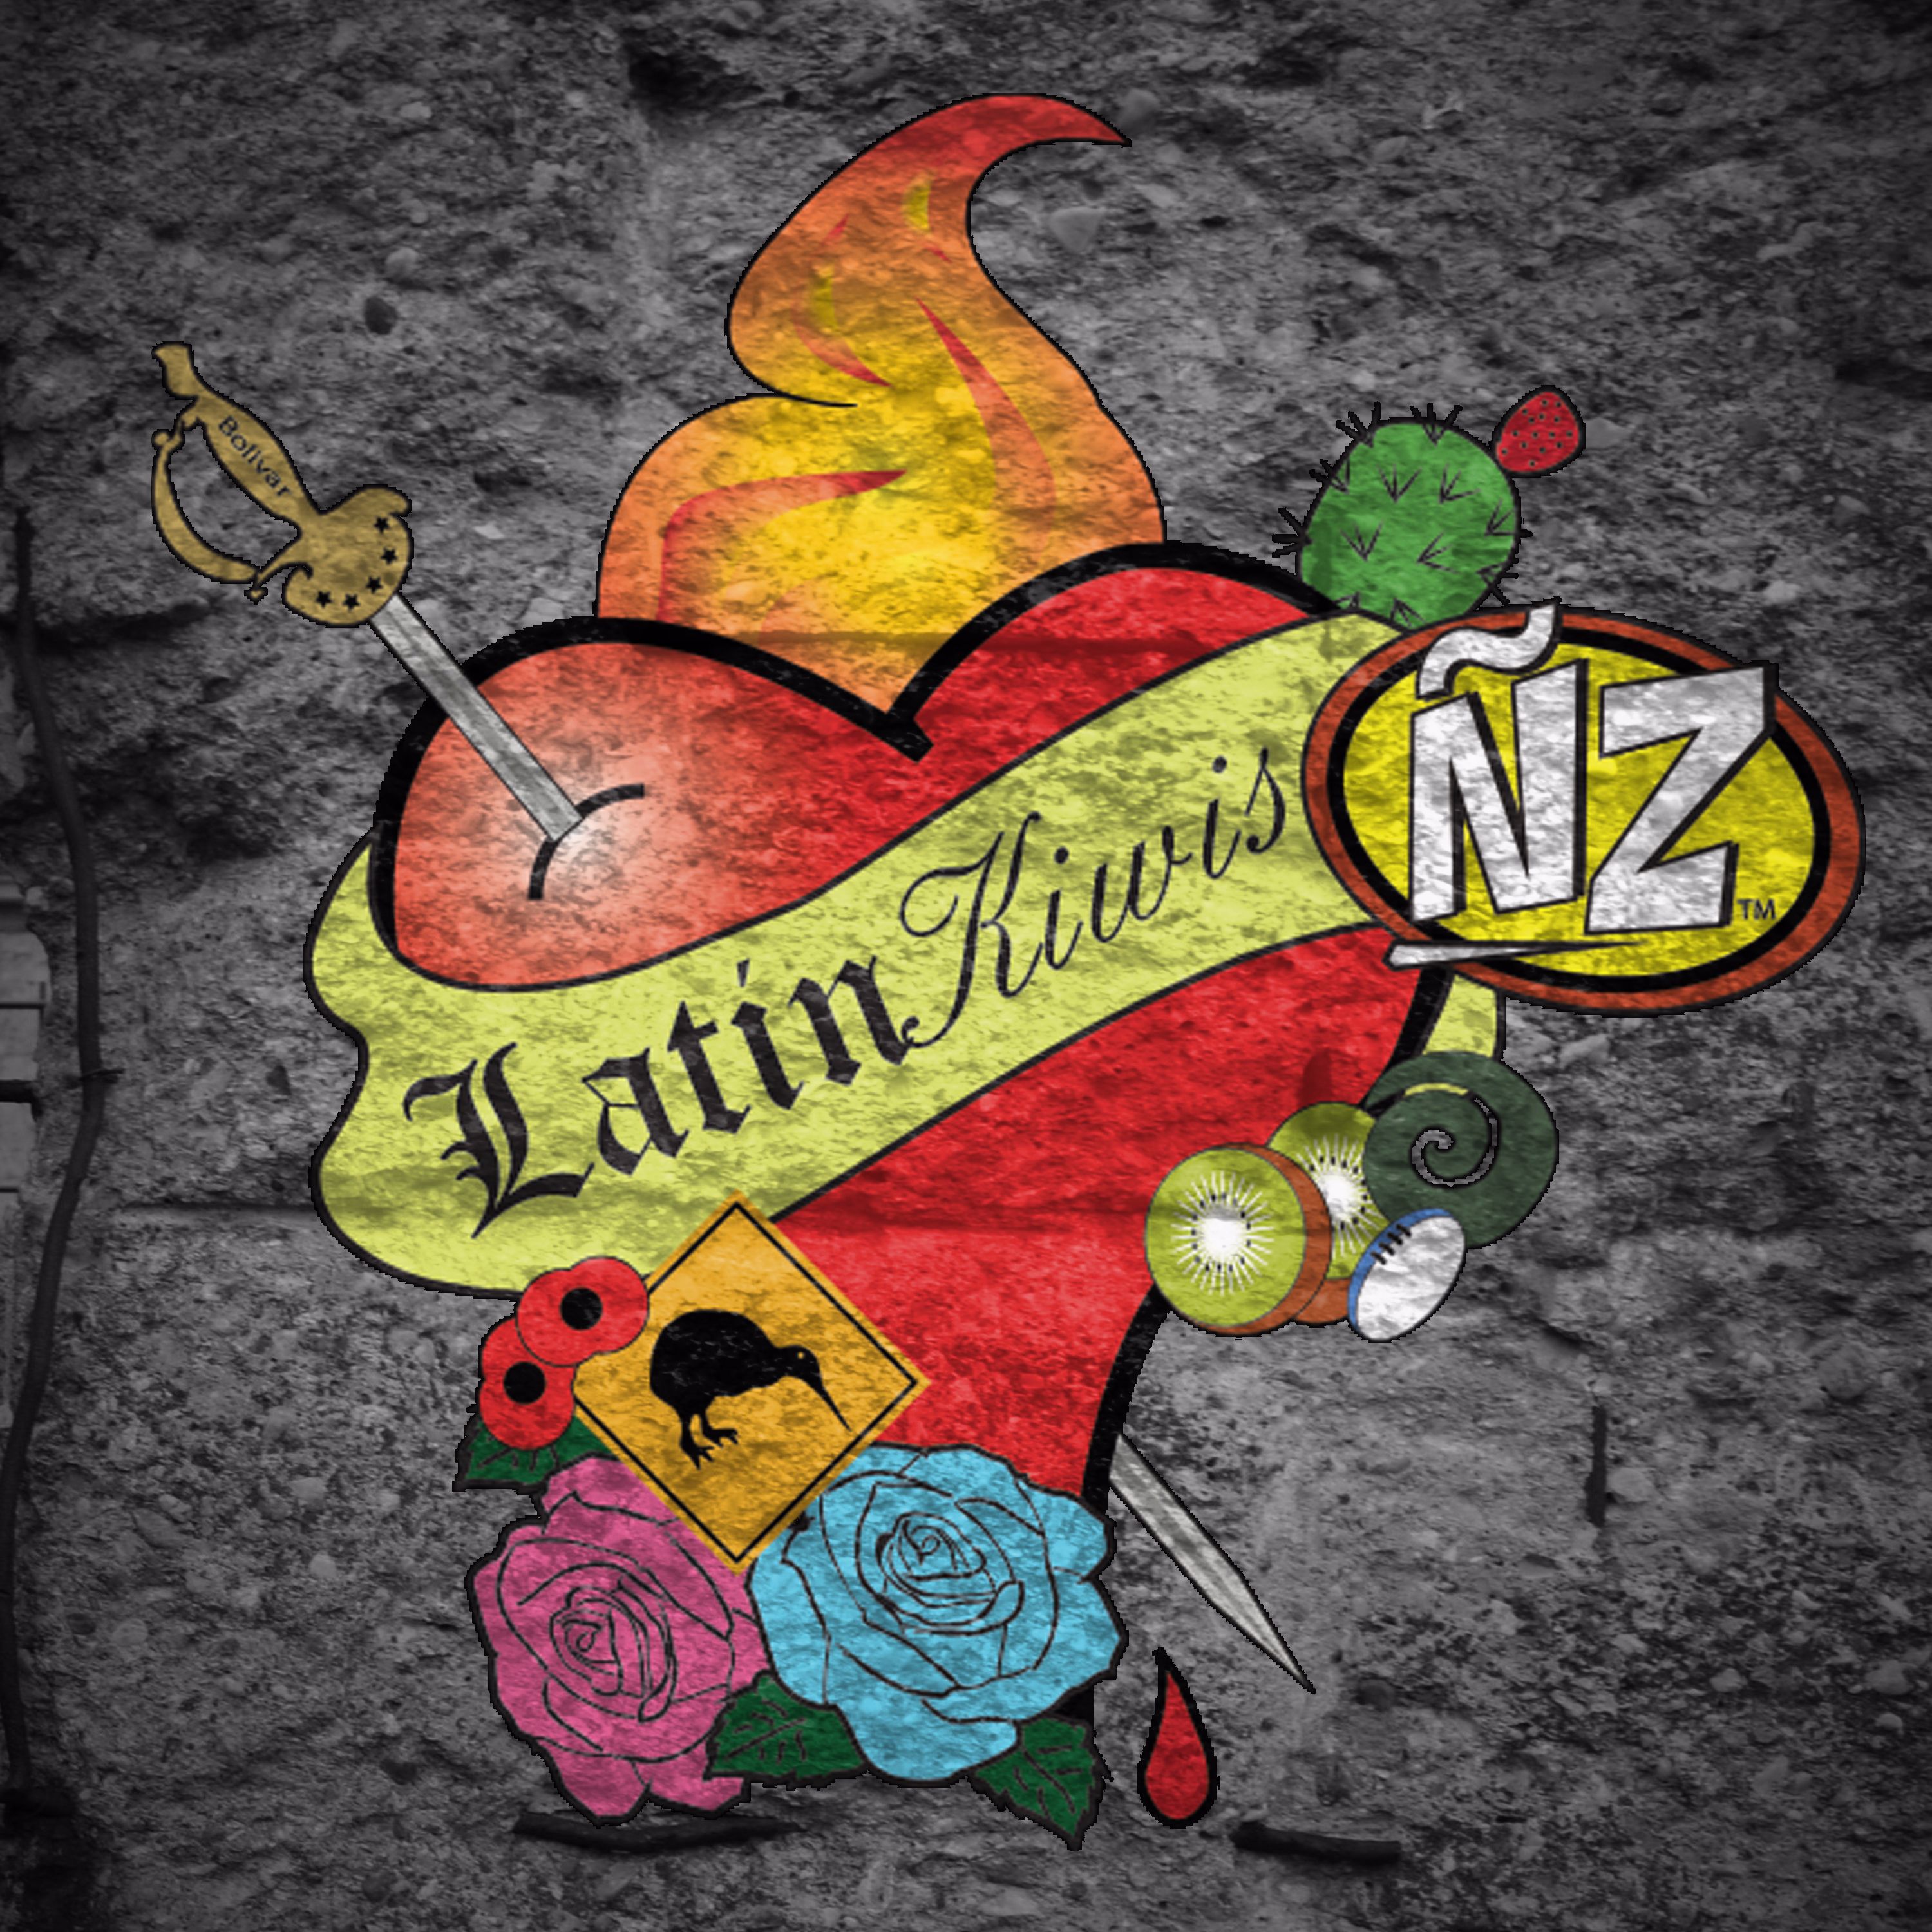 Latin Kiwis, podcast latinos in New Zealand